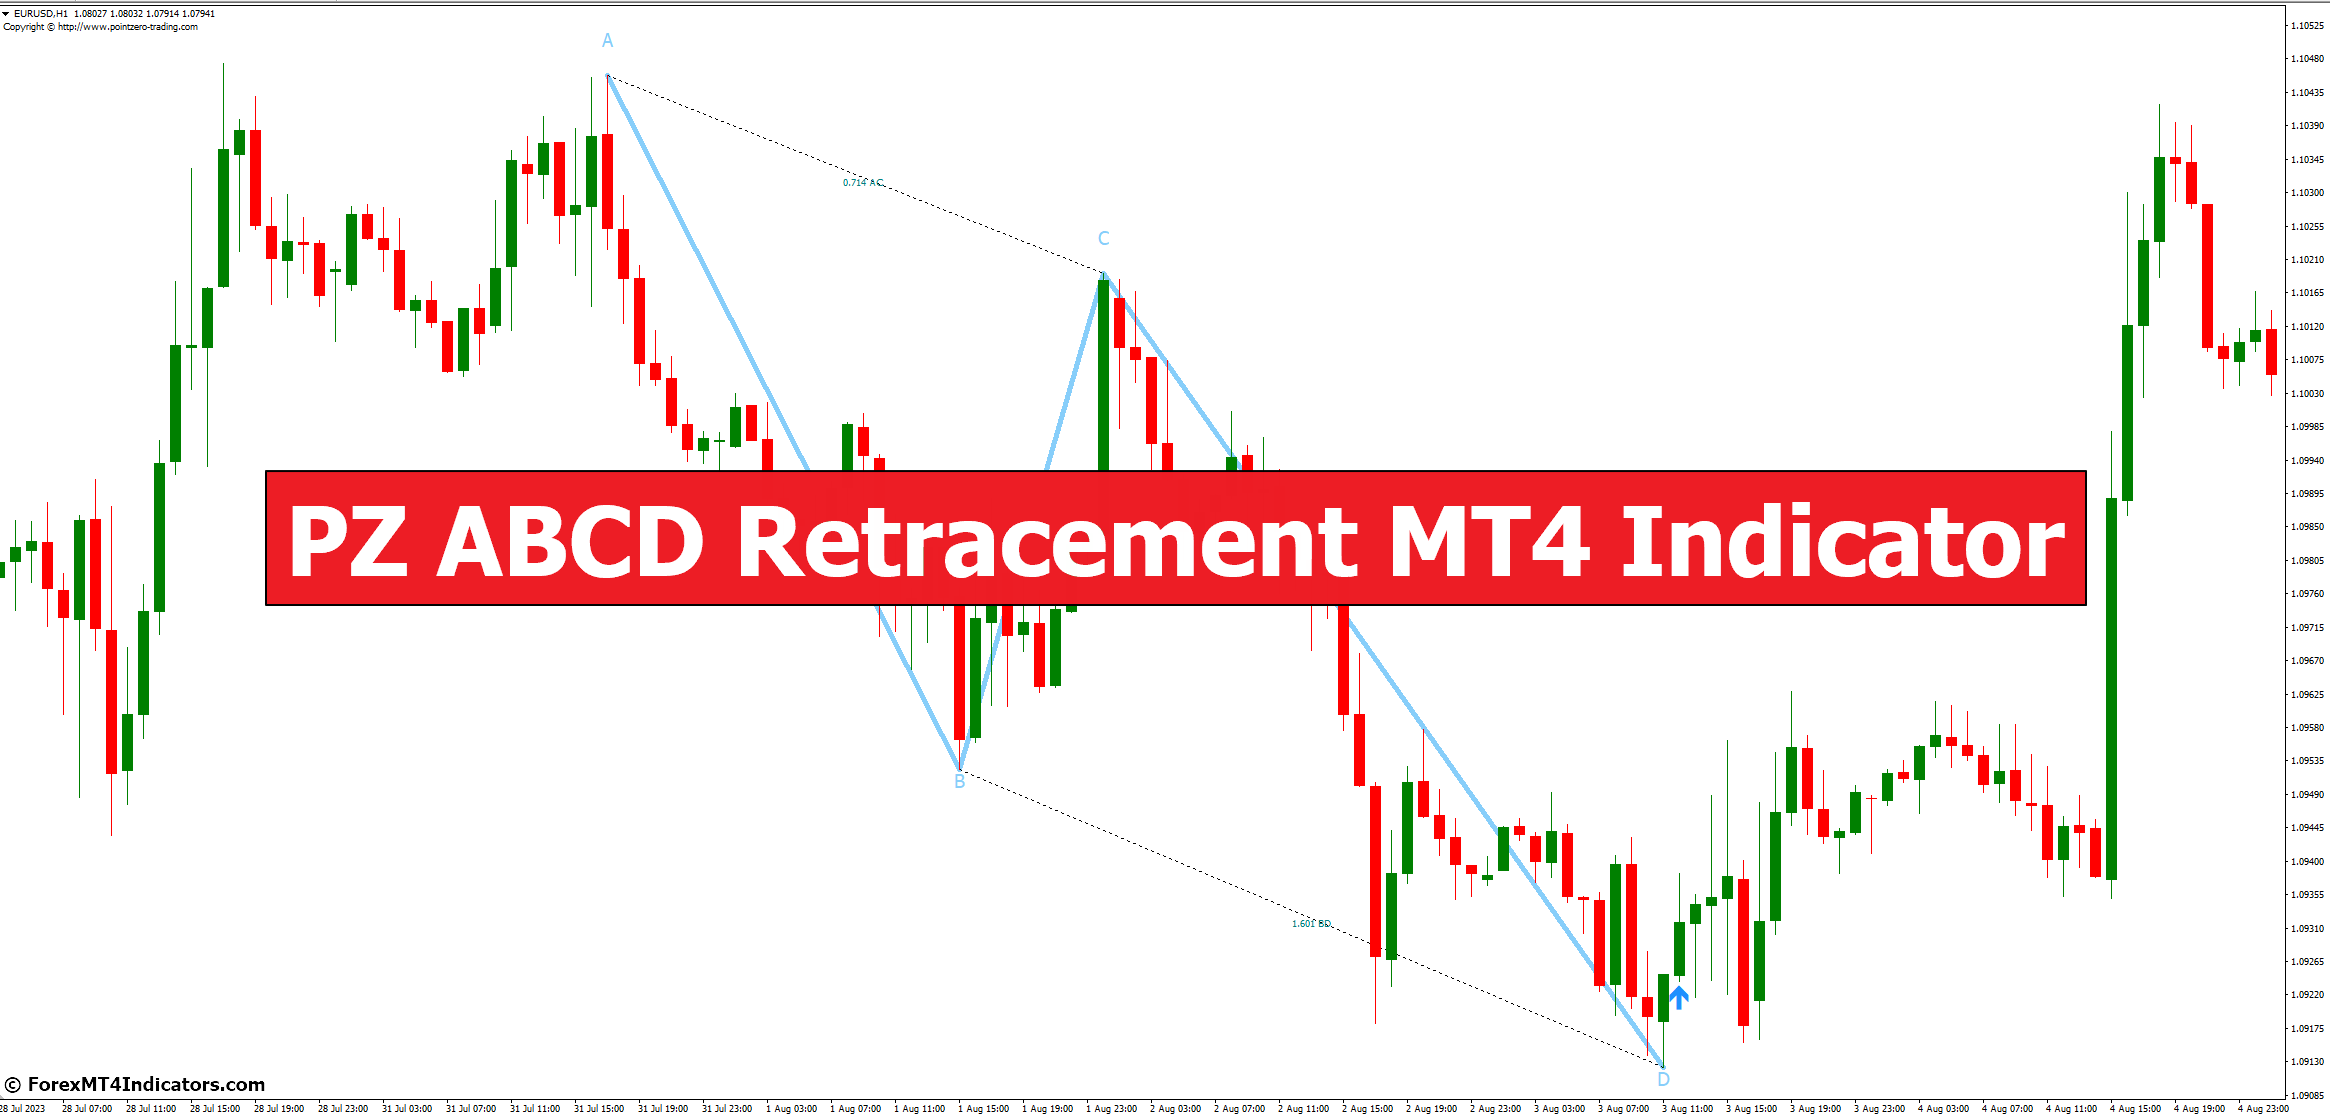 PZ ABCD Retracement MT4 Indicator